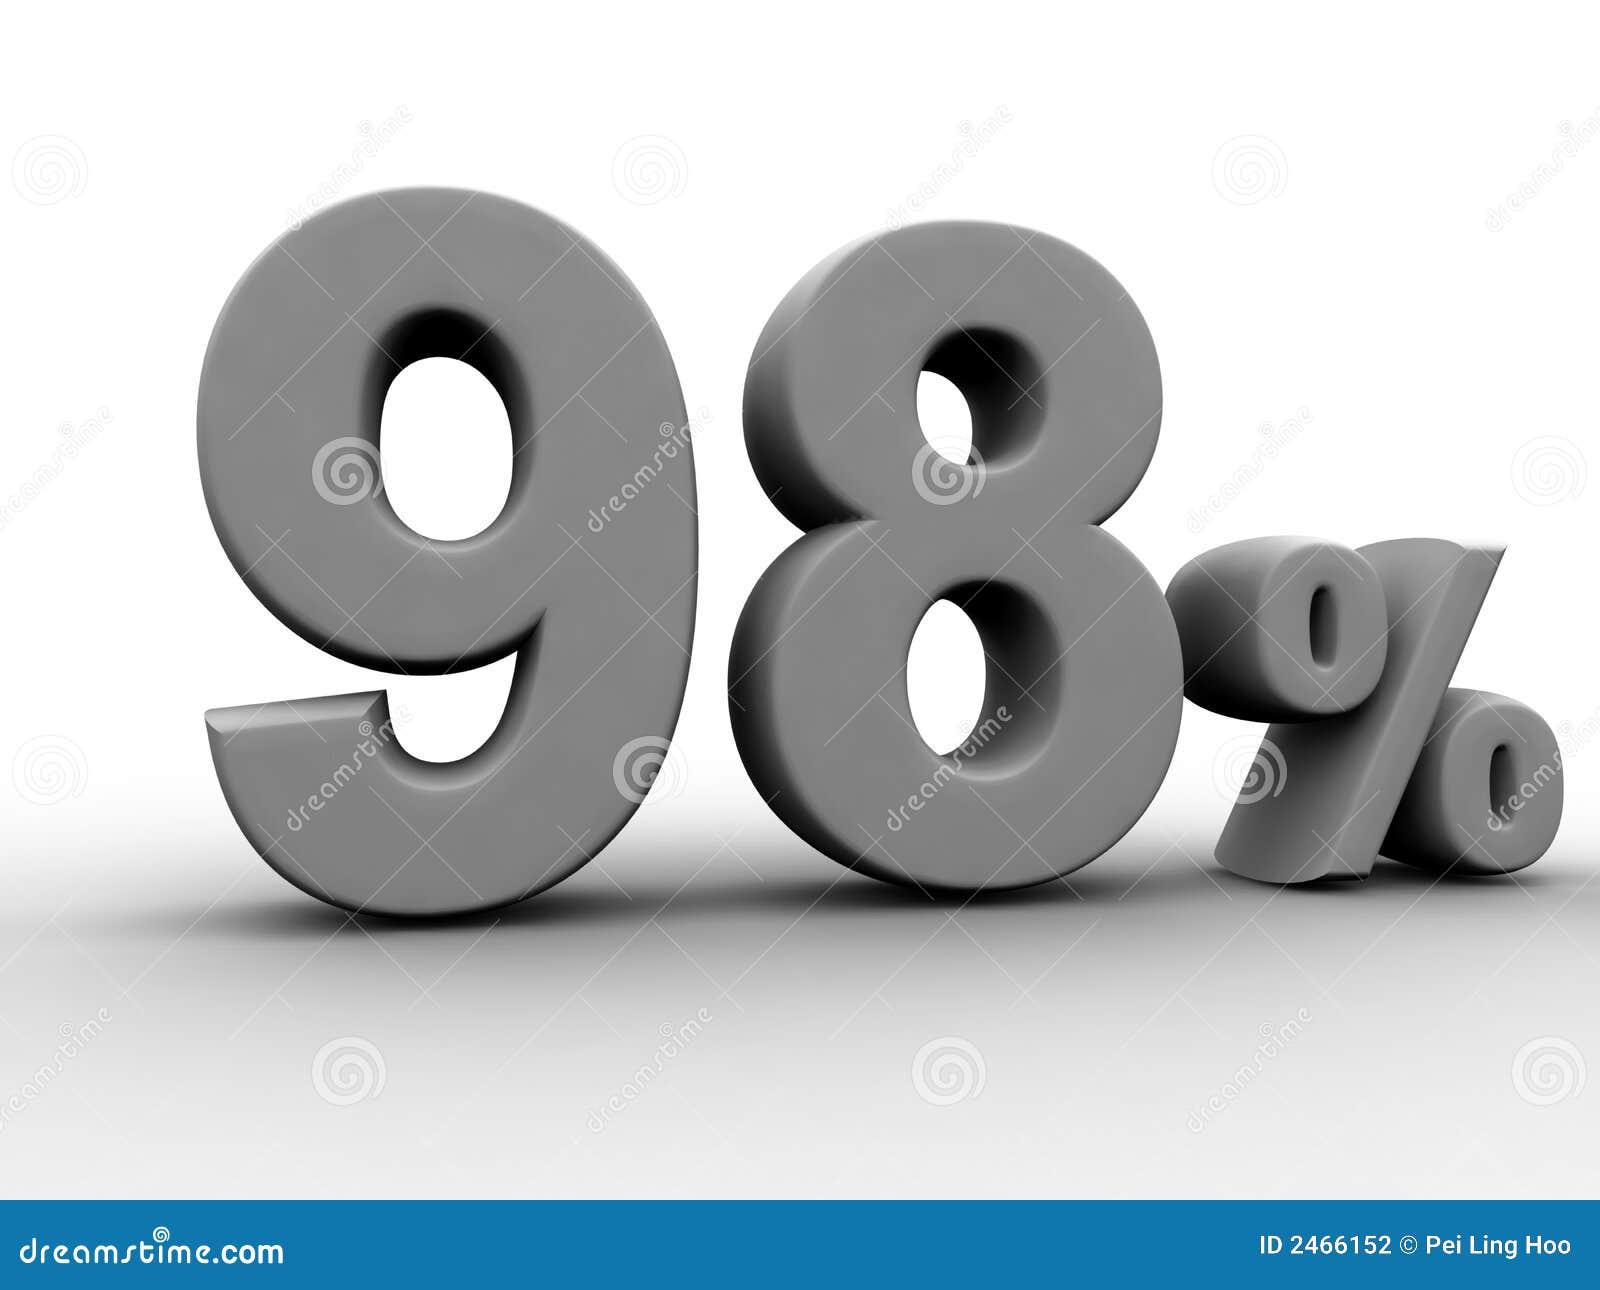 98-percent-stock-illustration-illustration-of-discount-2466152